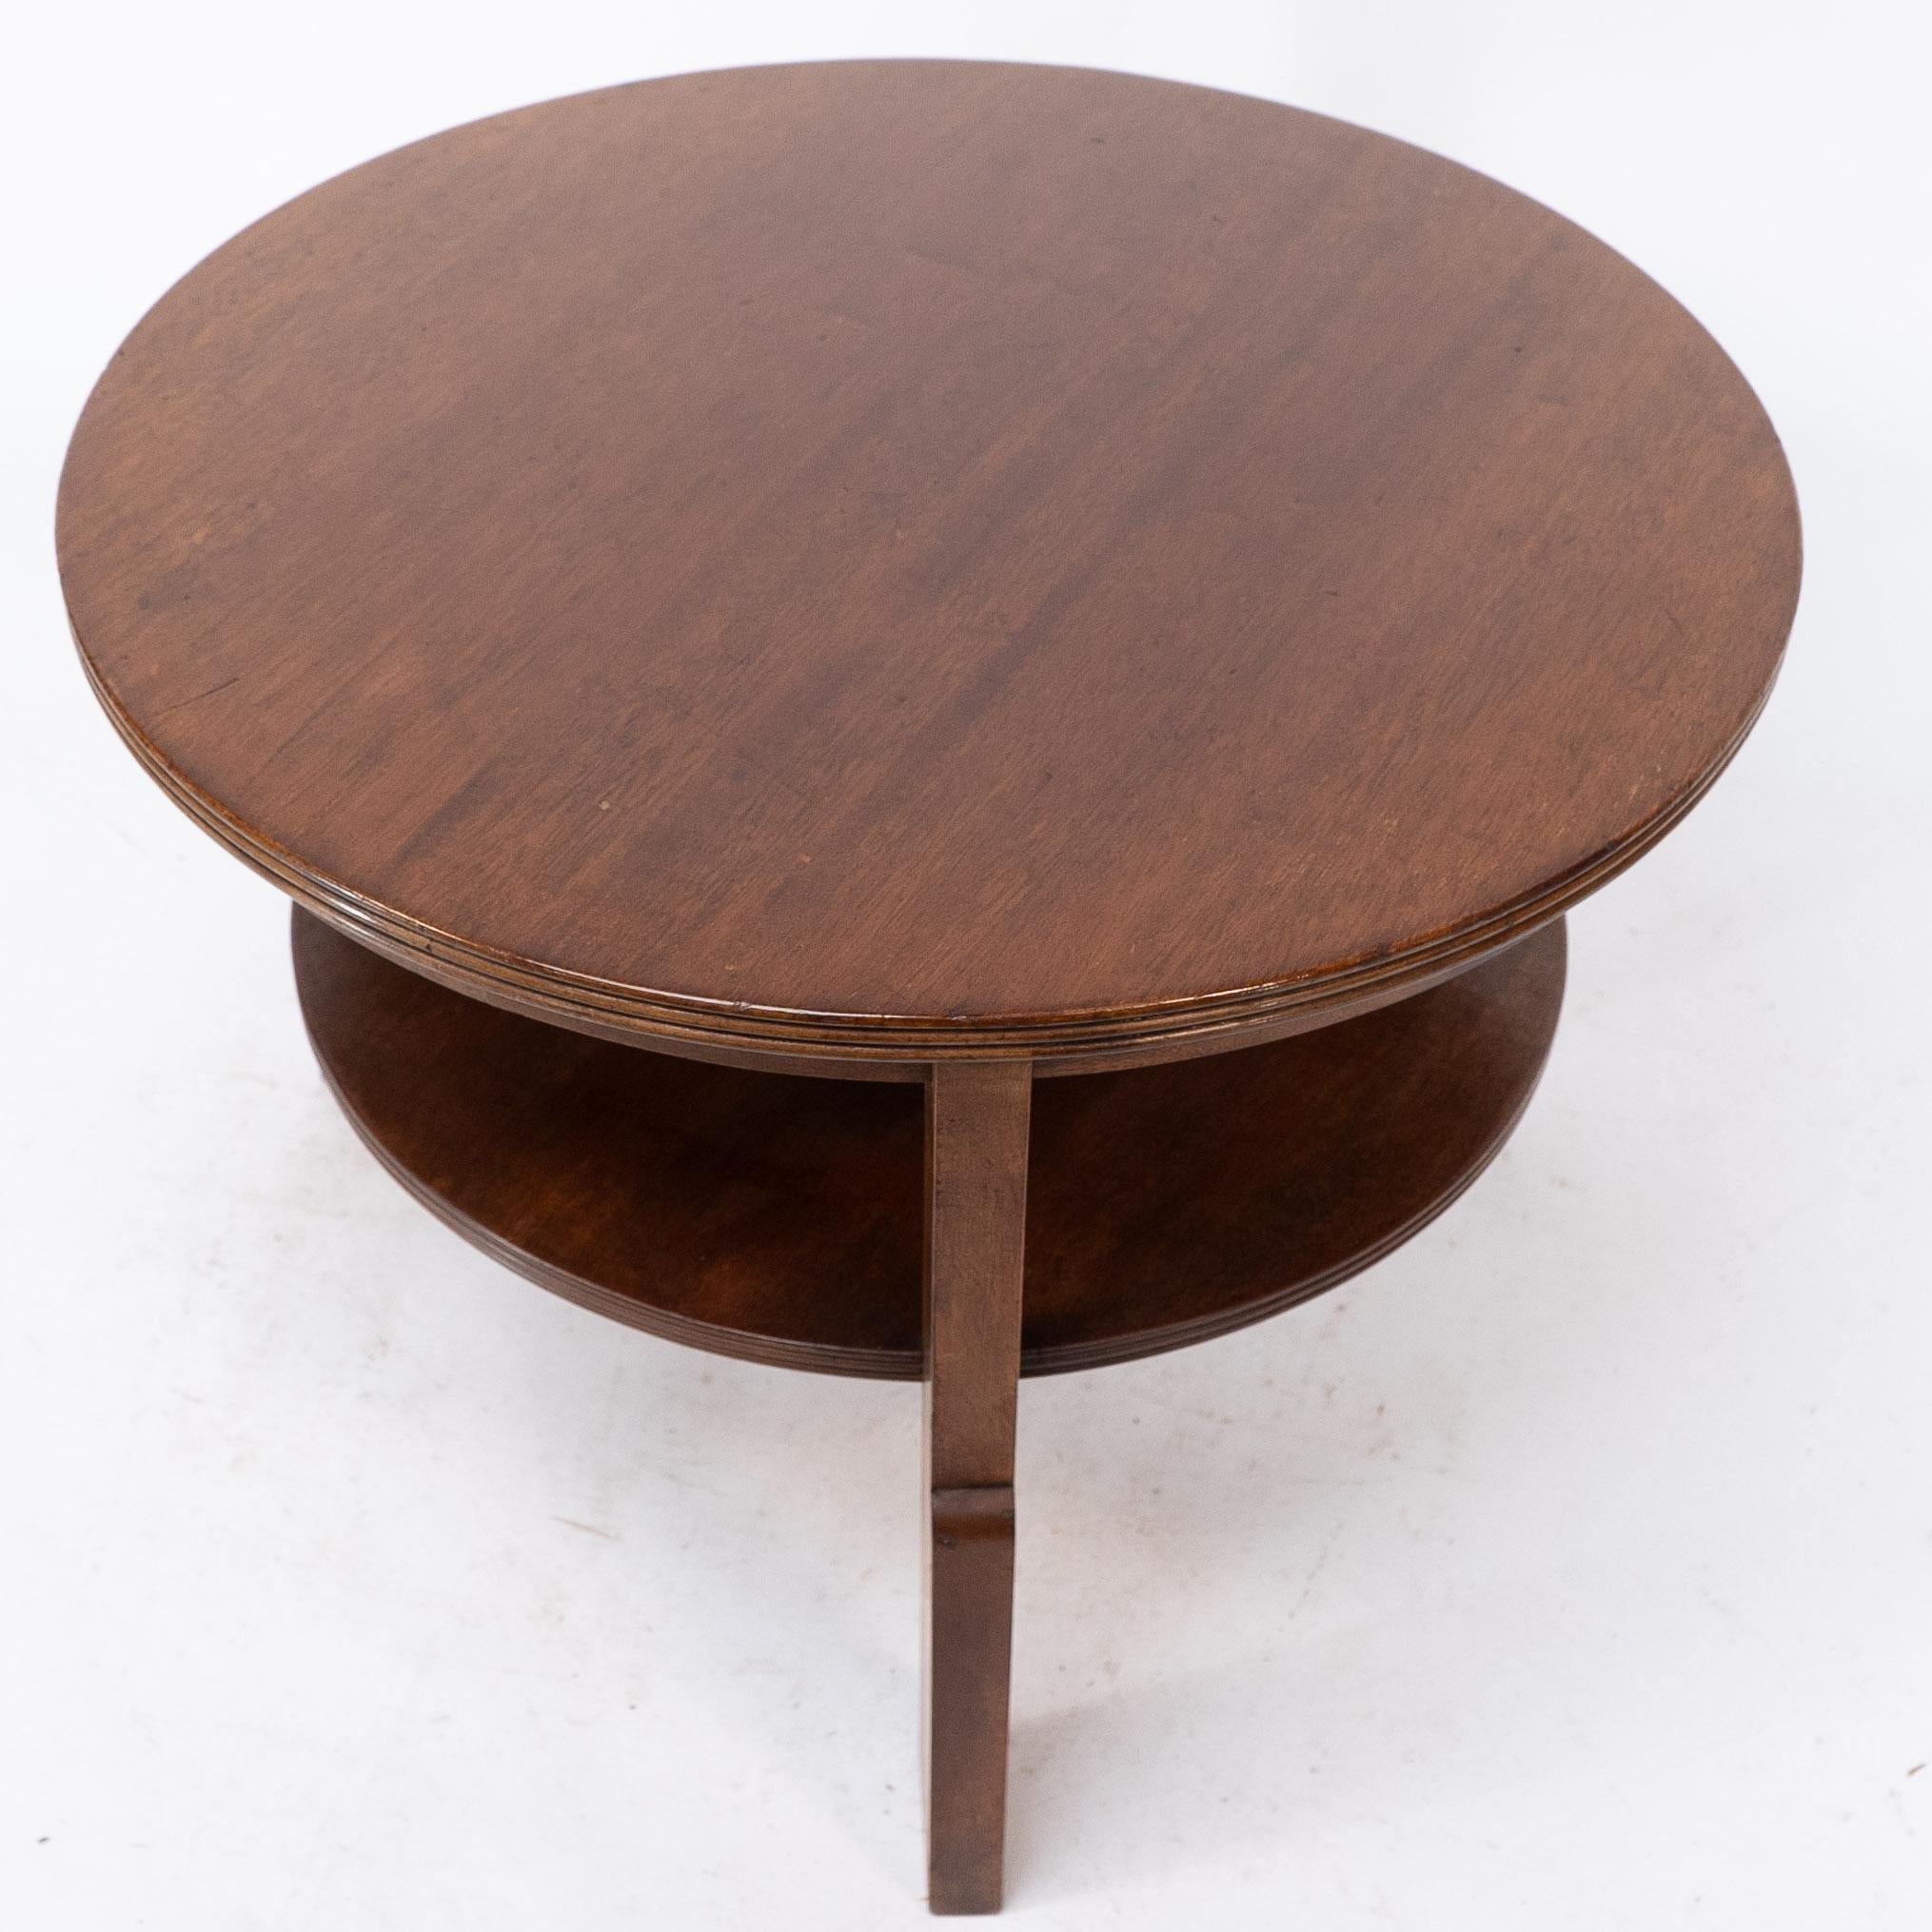 Walnut Gordon Russell. A gunstock figured walnut coffee table on gunstock shaped legs